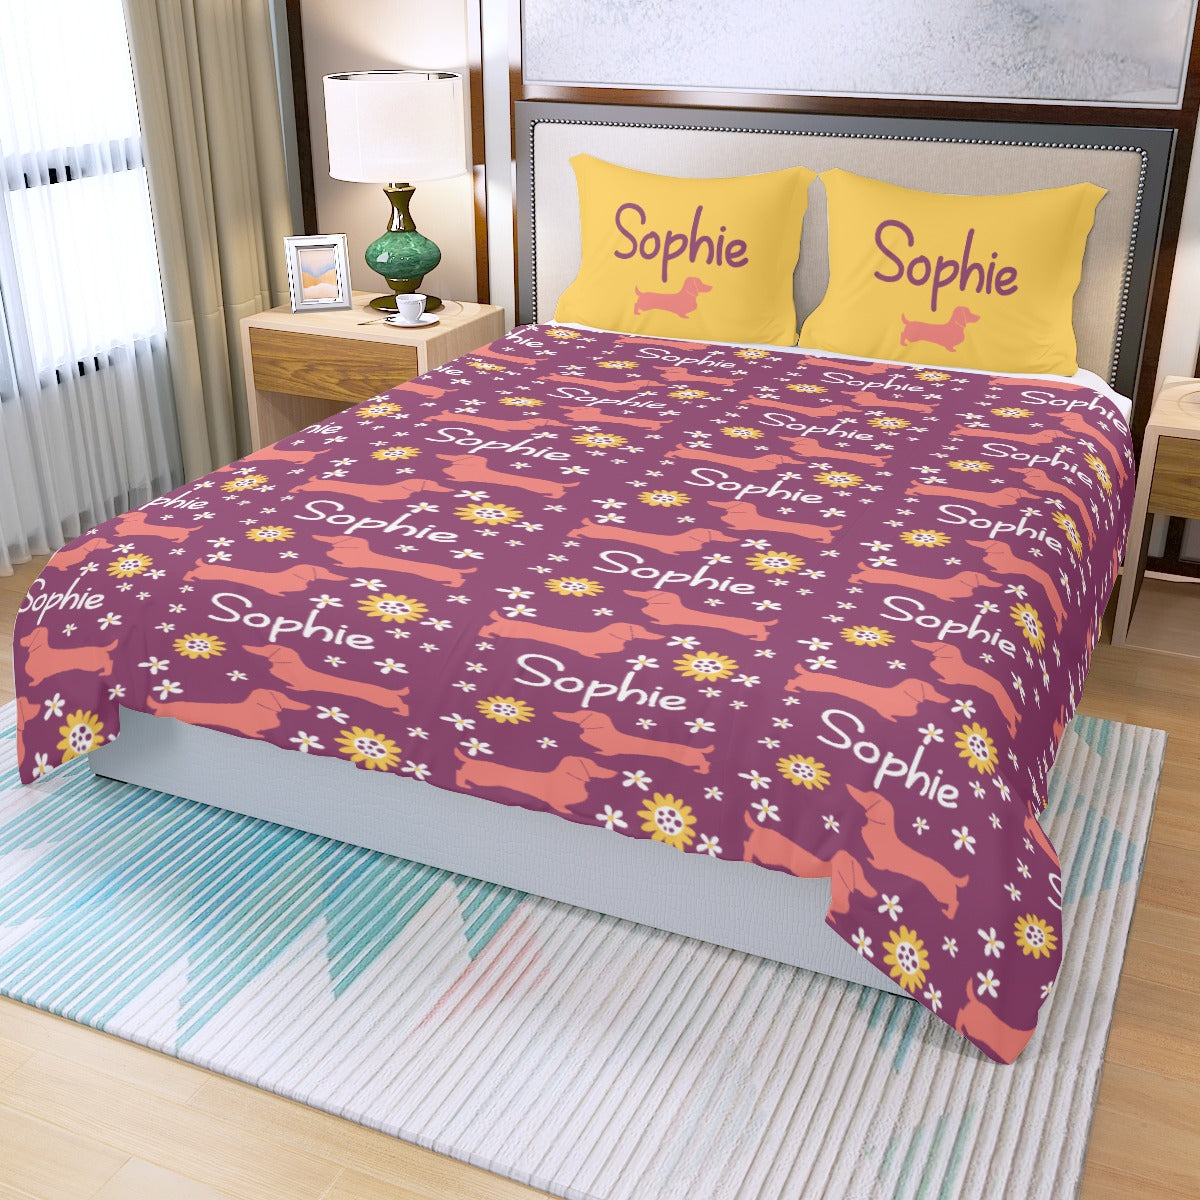 Custom Bedding Set with Dachshund's Name - Bedding Set